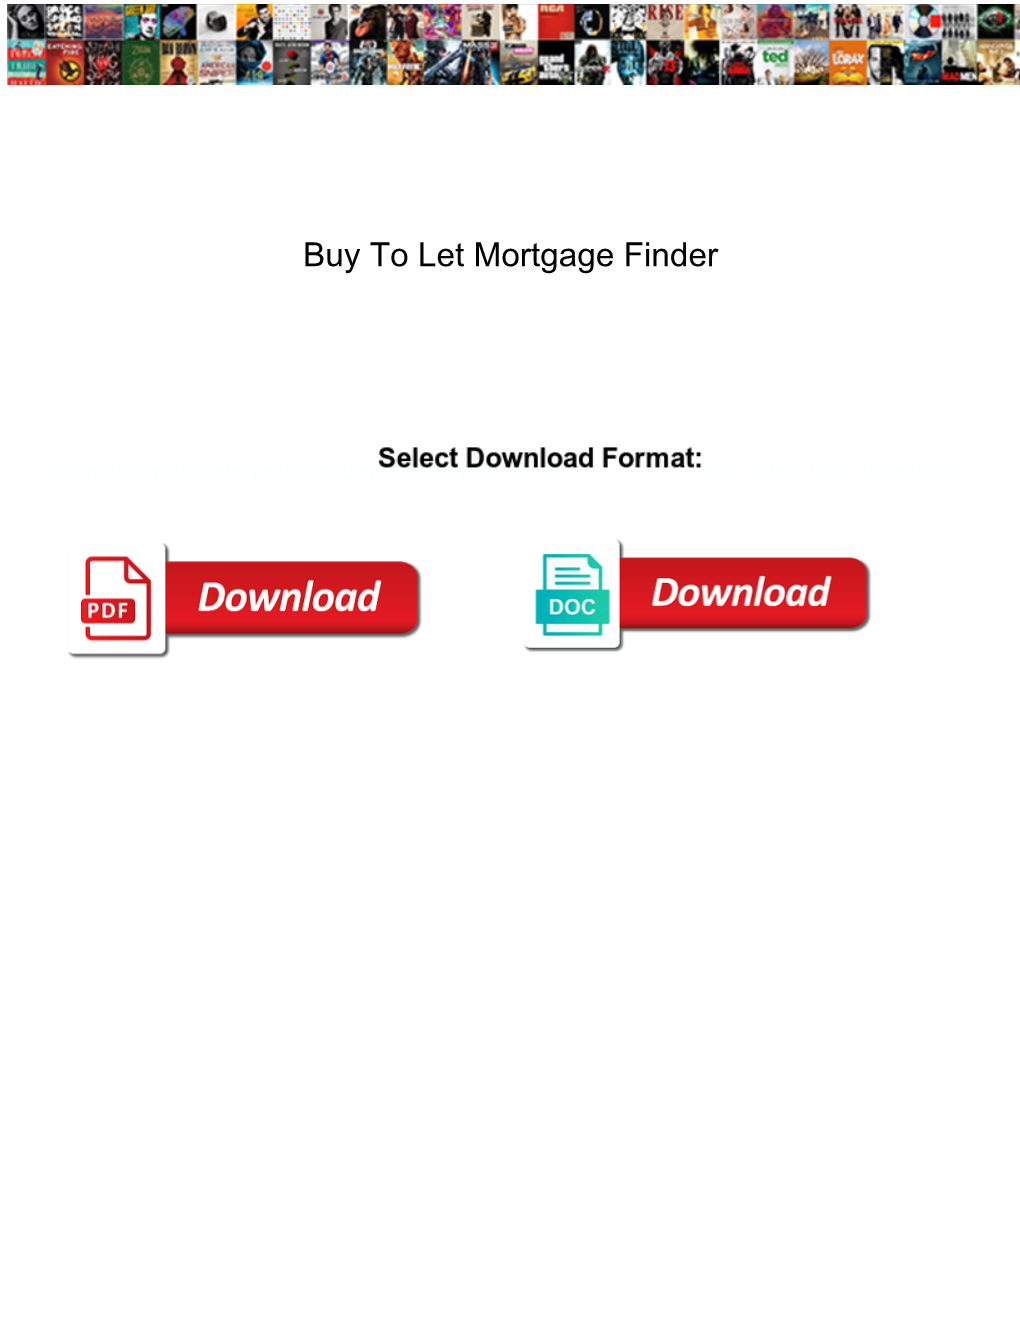 Buy to Let Mortgage Finder